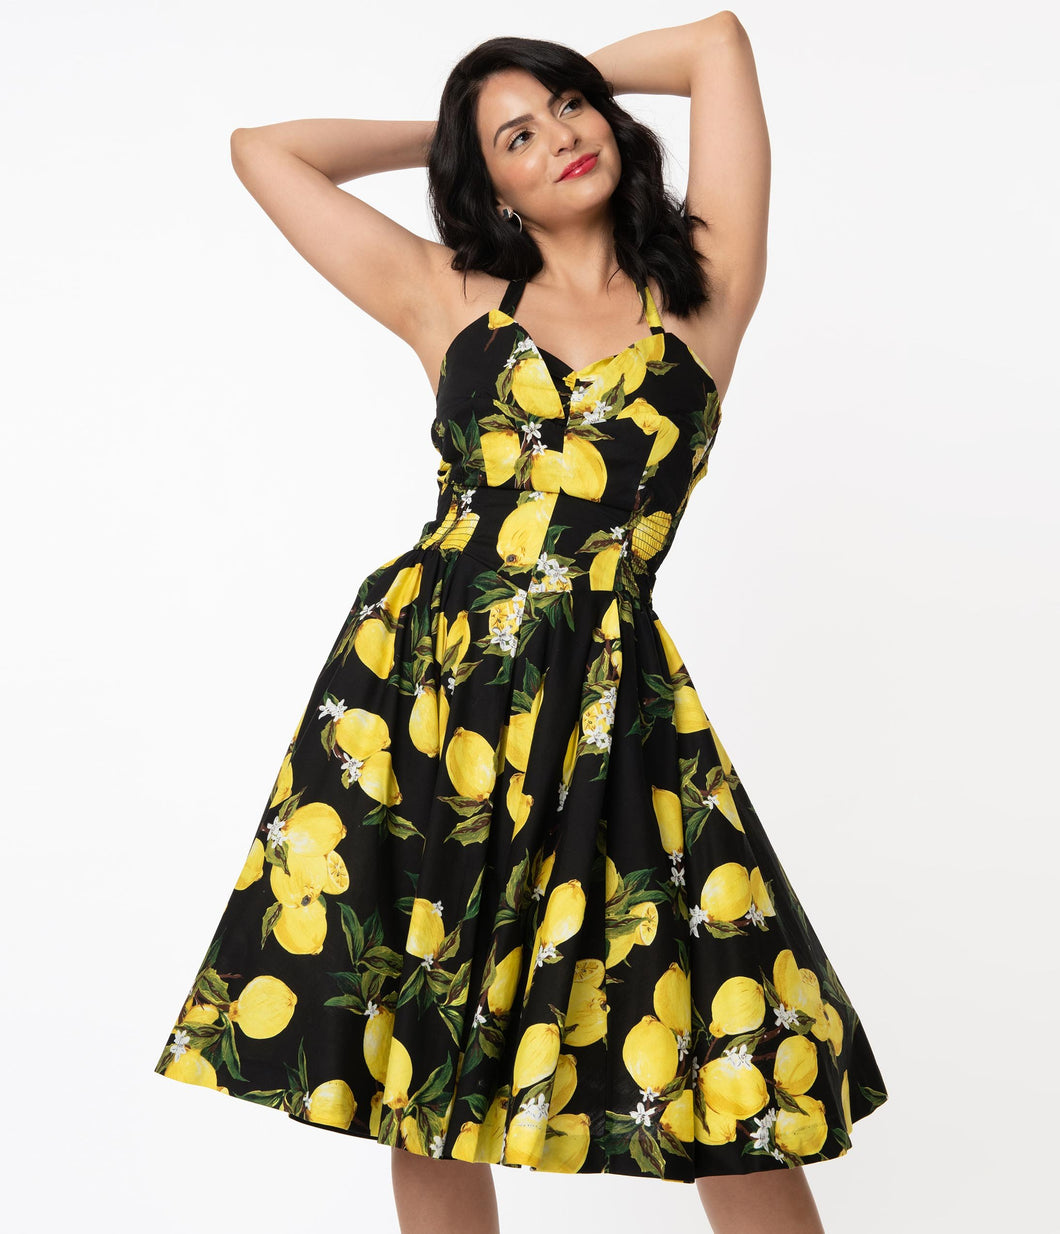 Lemon Orchard Swing Dress